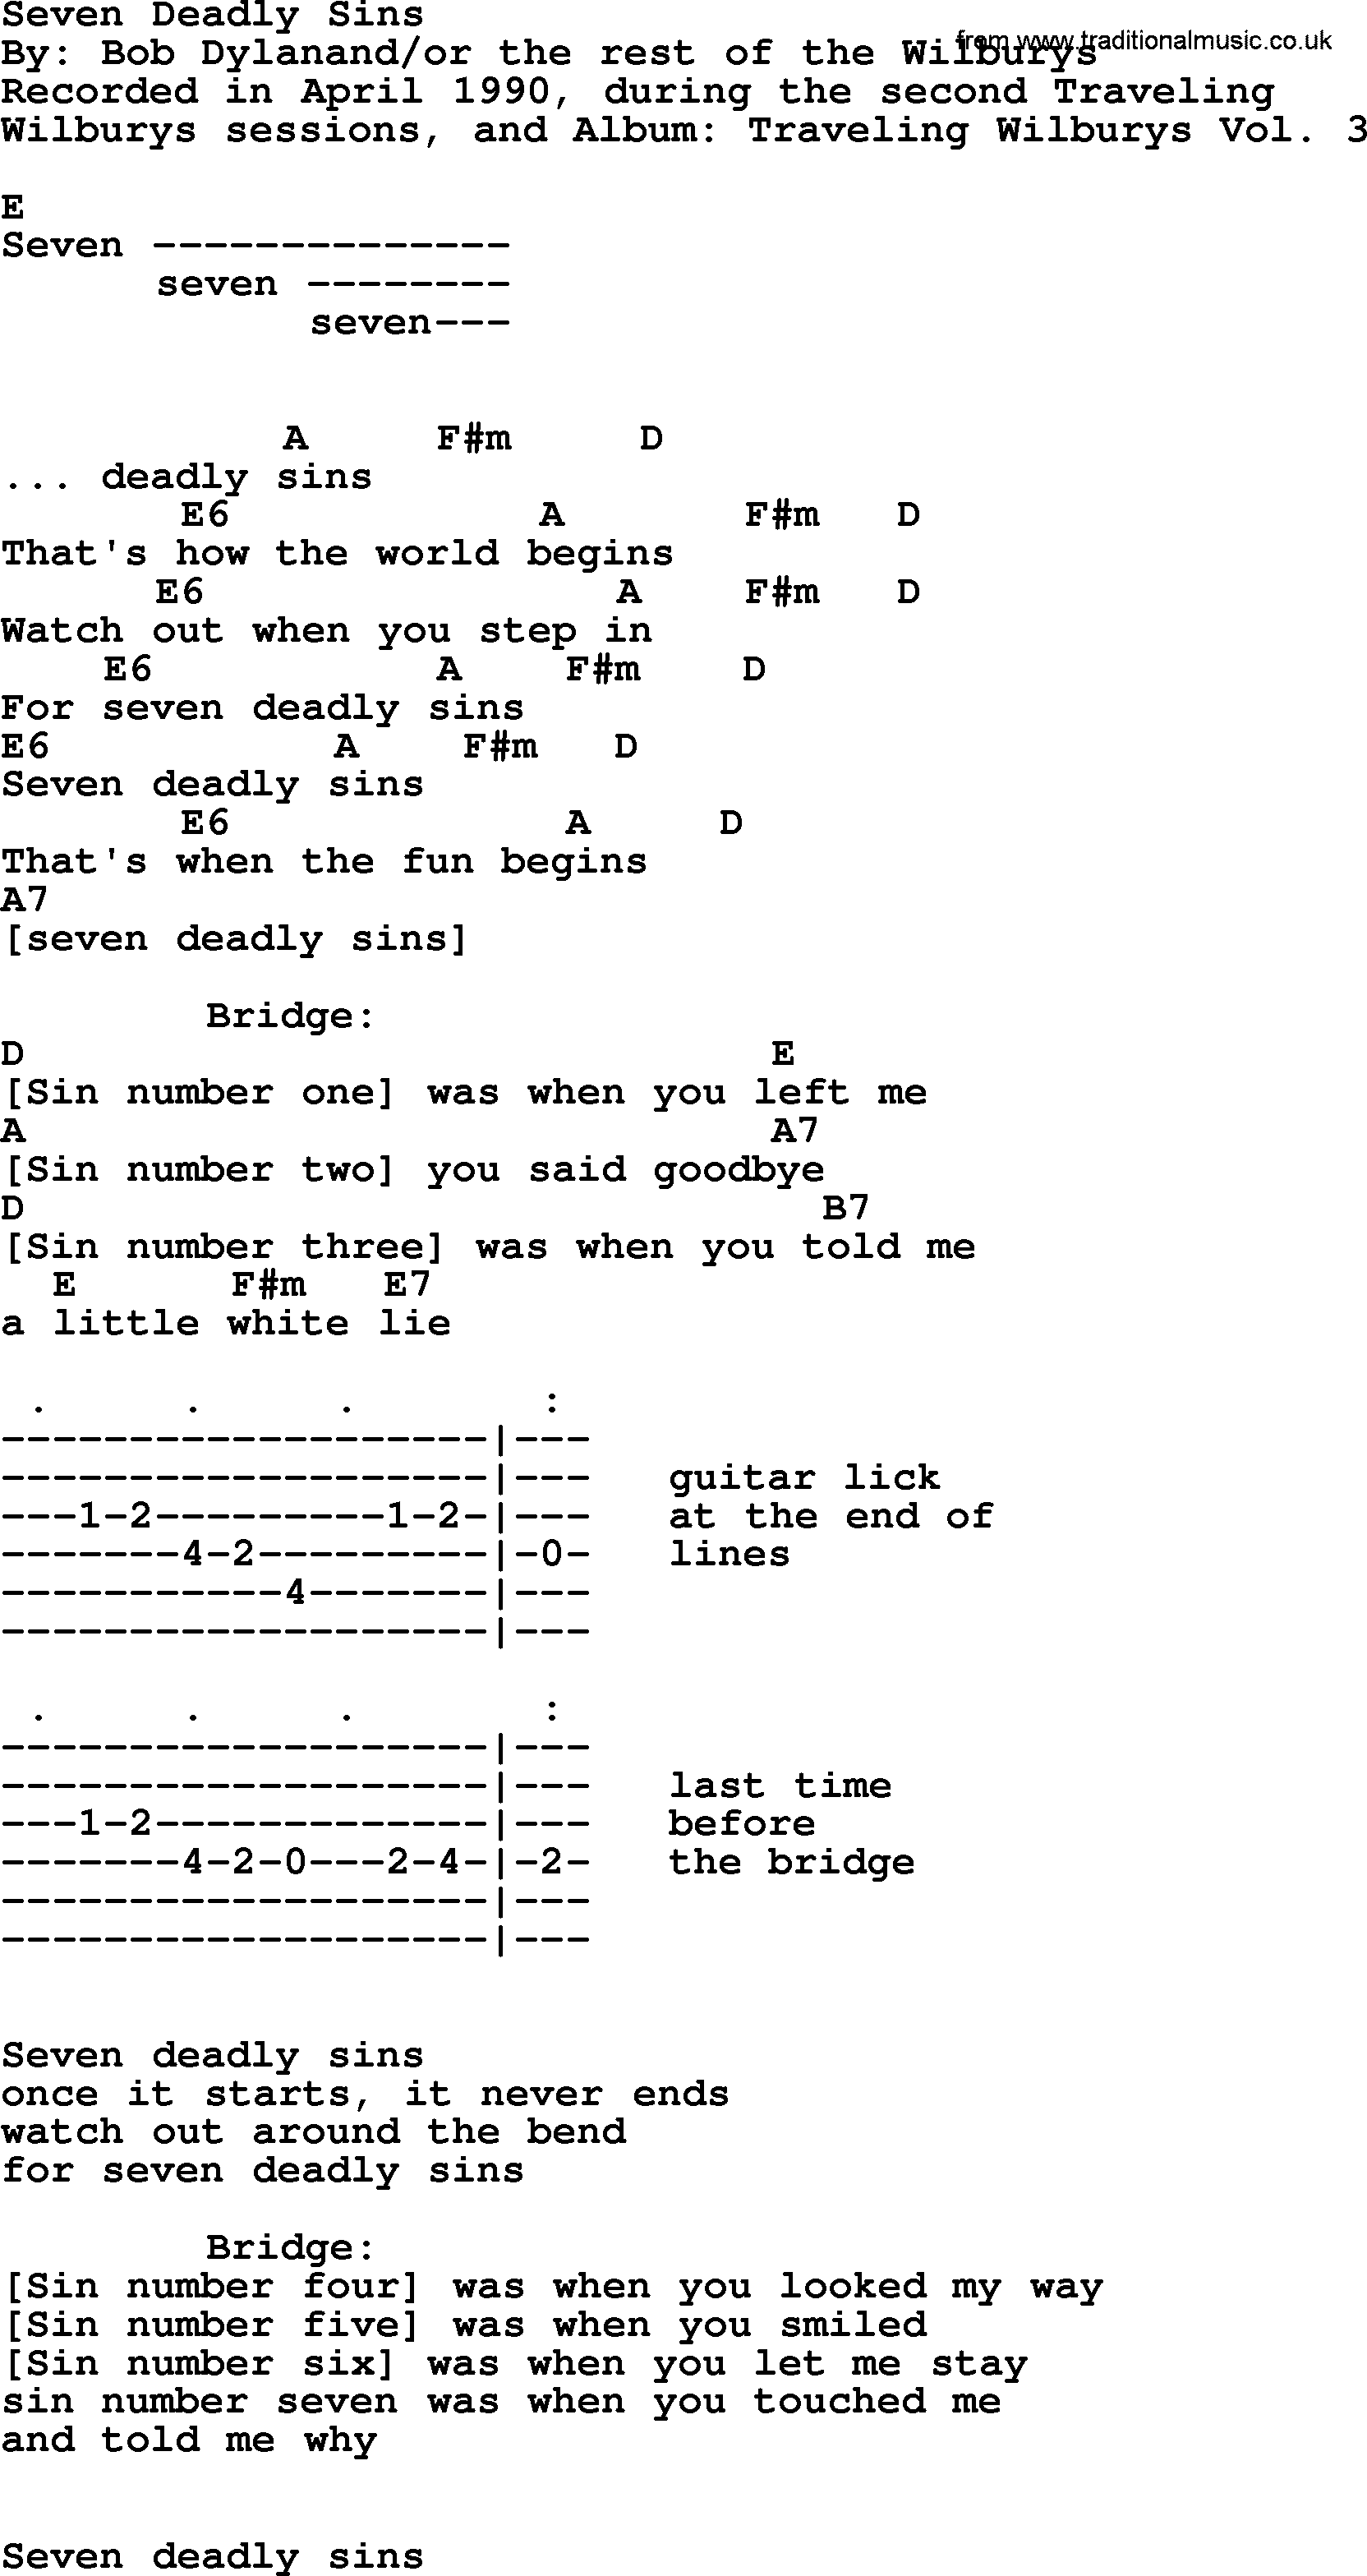 Nanatsu no taizai opening 1 full (lyrics) 